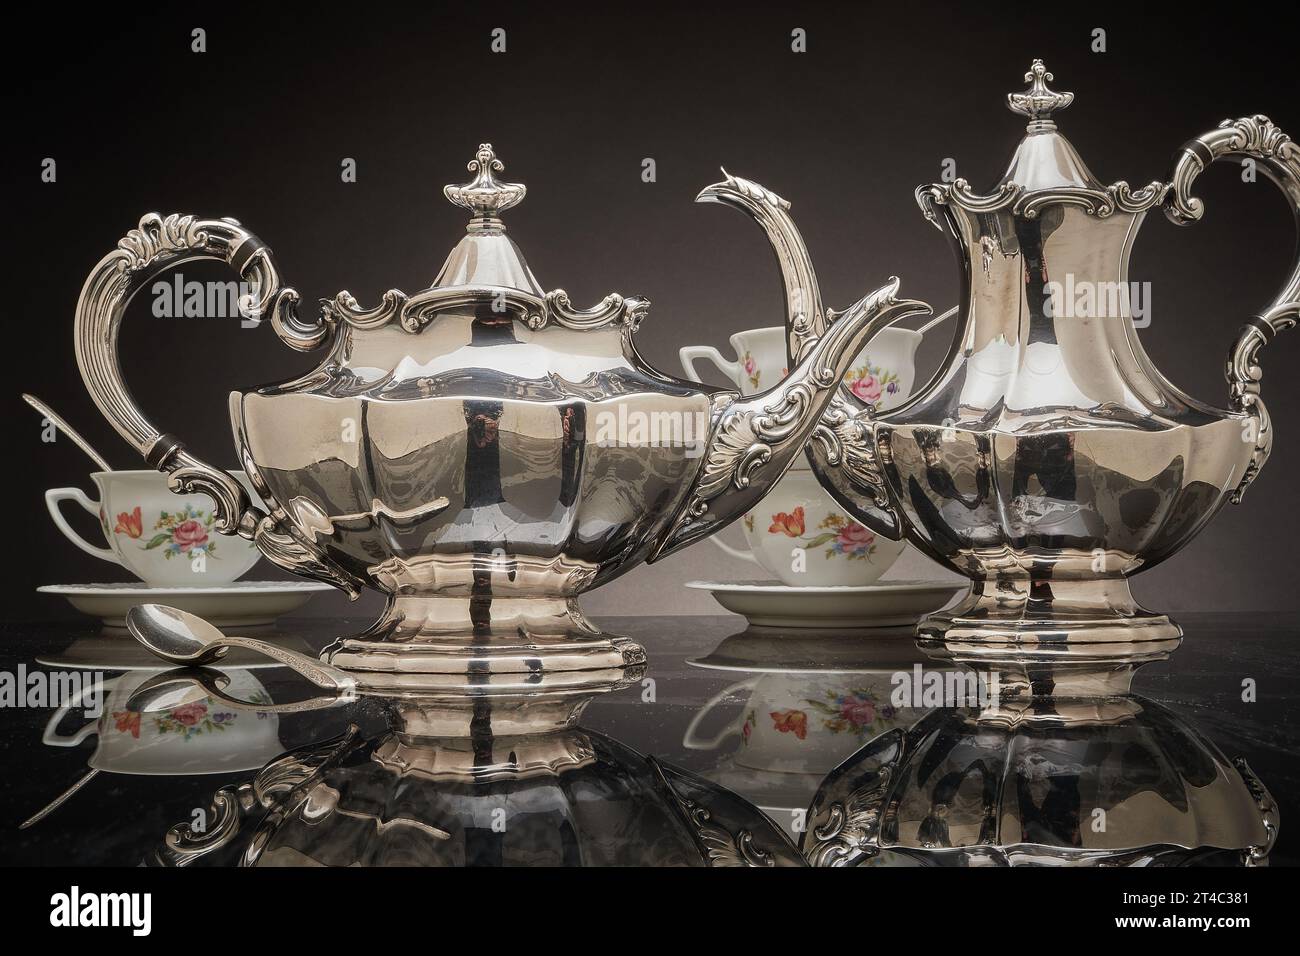 Silver tea set, teacups & silver spoons Stock Photo